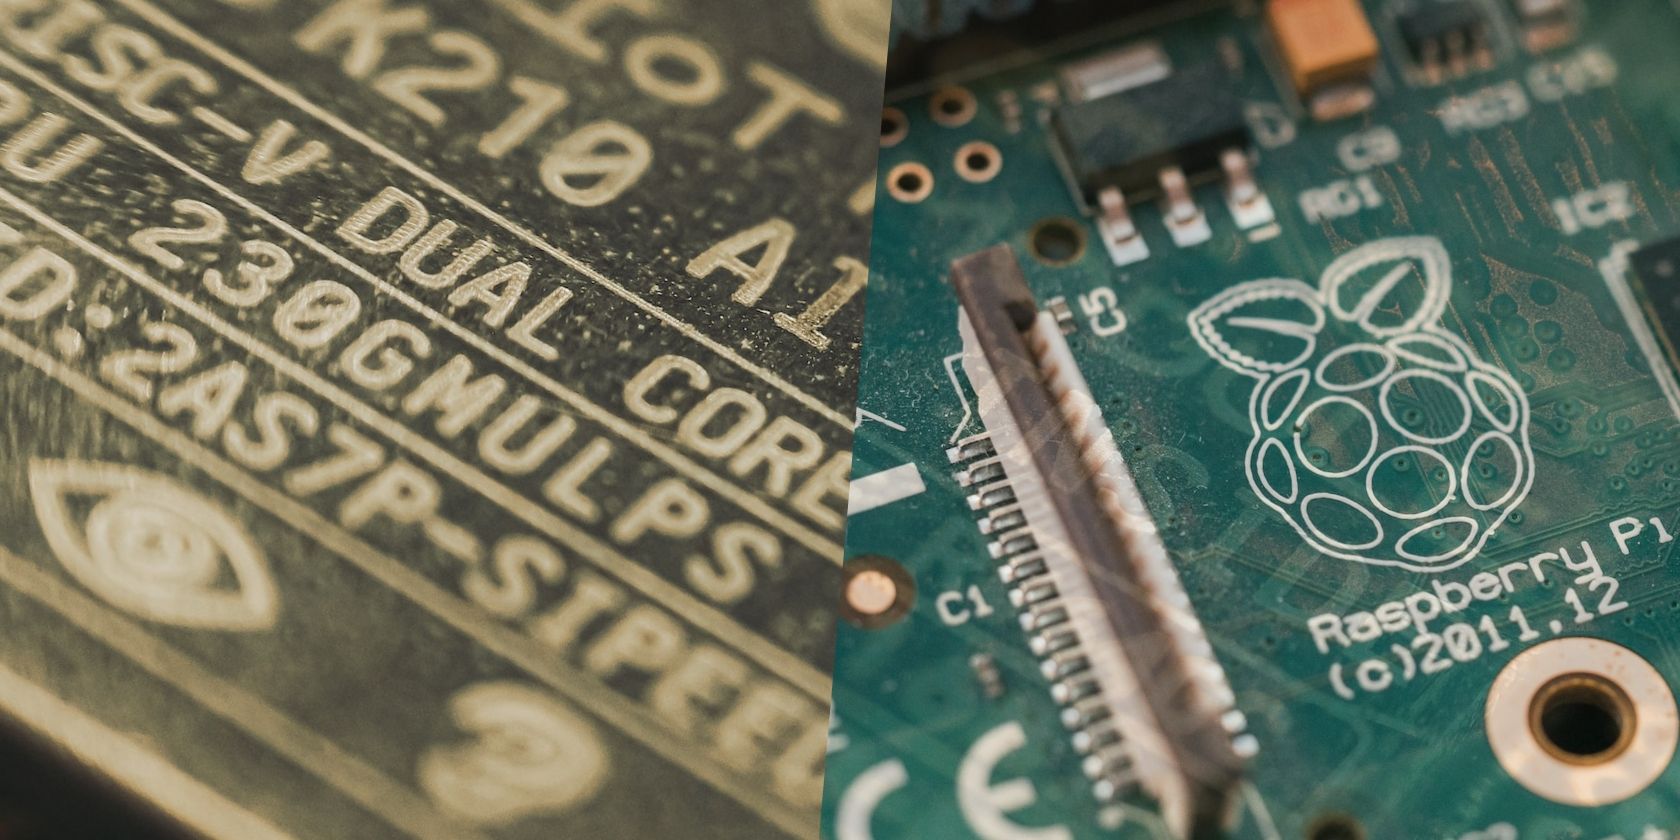 Close-ups of RISC V and Raspberry Pi boards